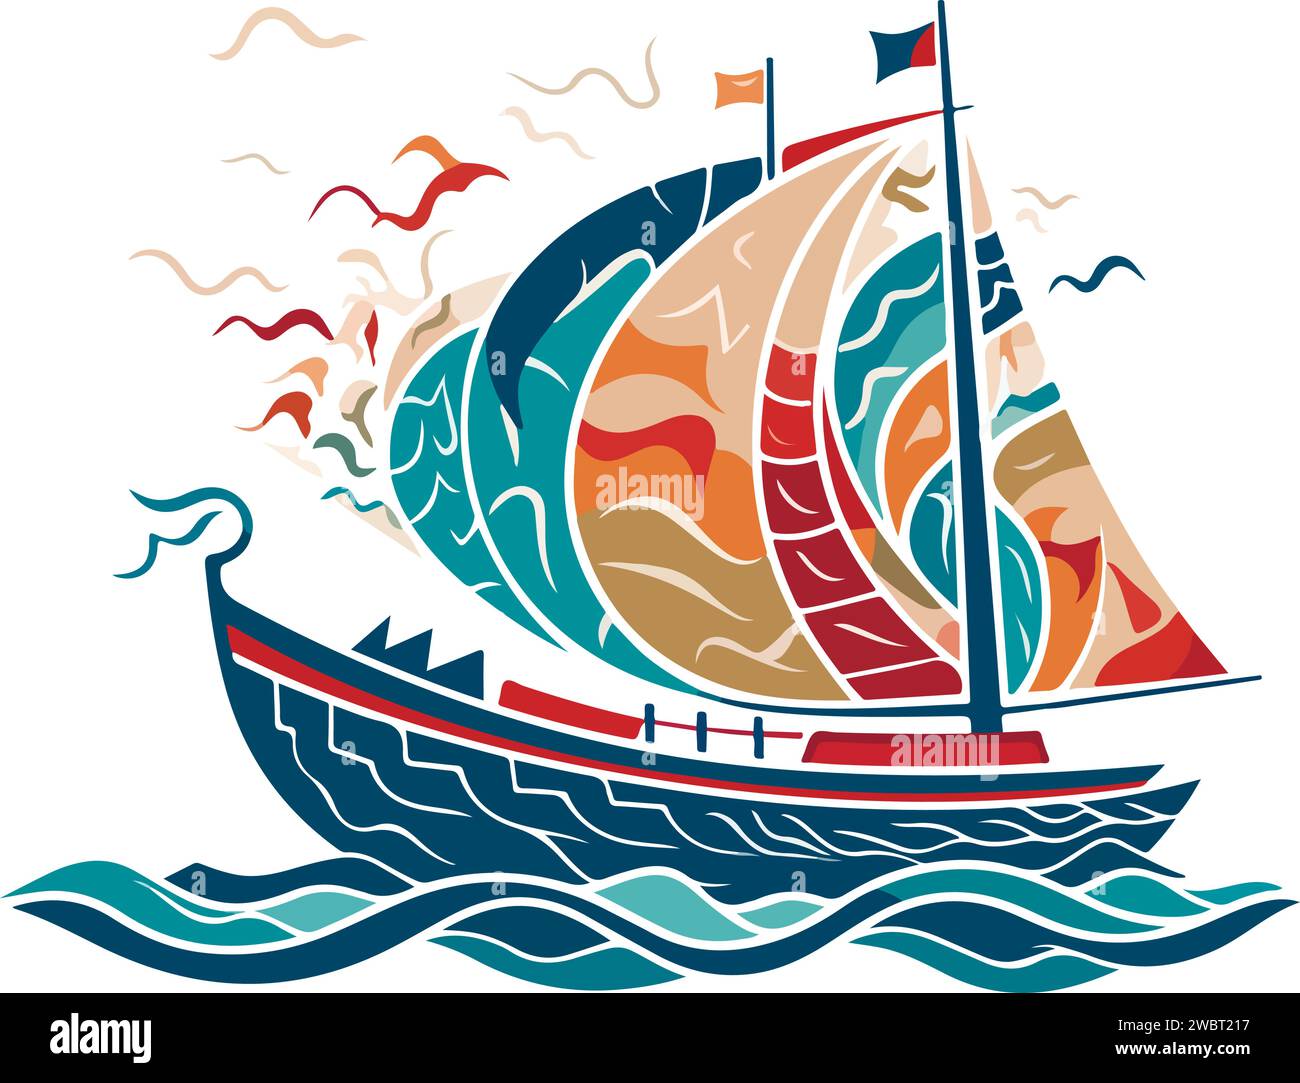 Vector ornamental ancient sailboat illustration. Abstract historical mythology ship logo. Good for print or tattoo. Stock Vector